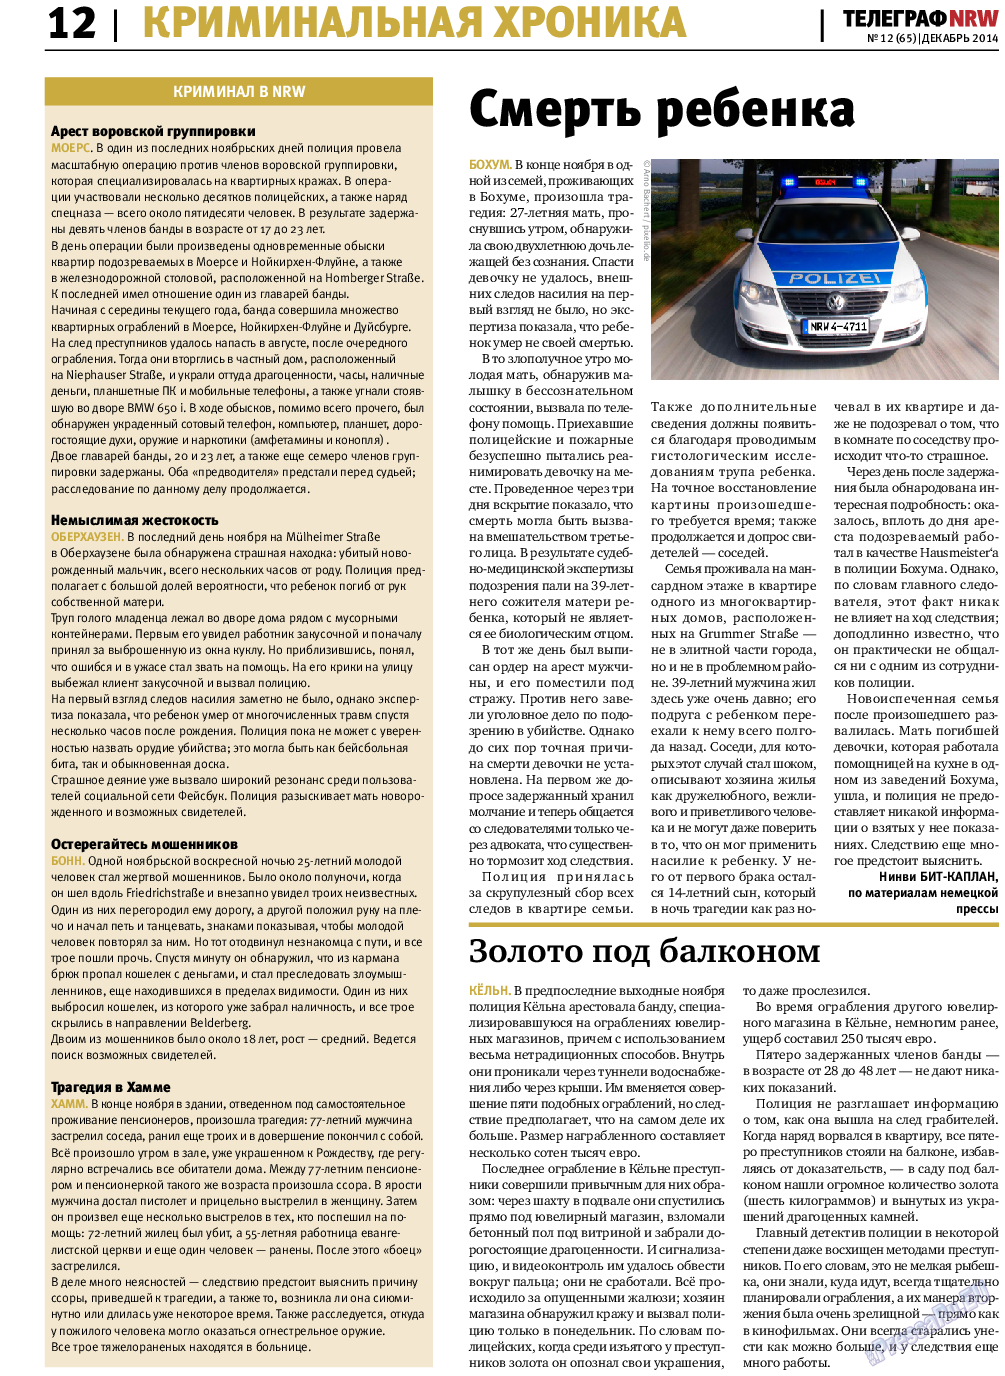 Телеграф NRW, газета. 2014 №12 стр.12